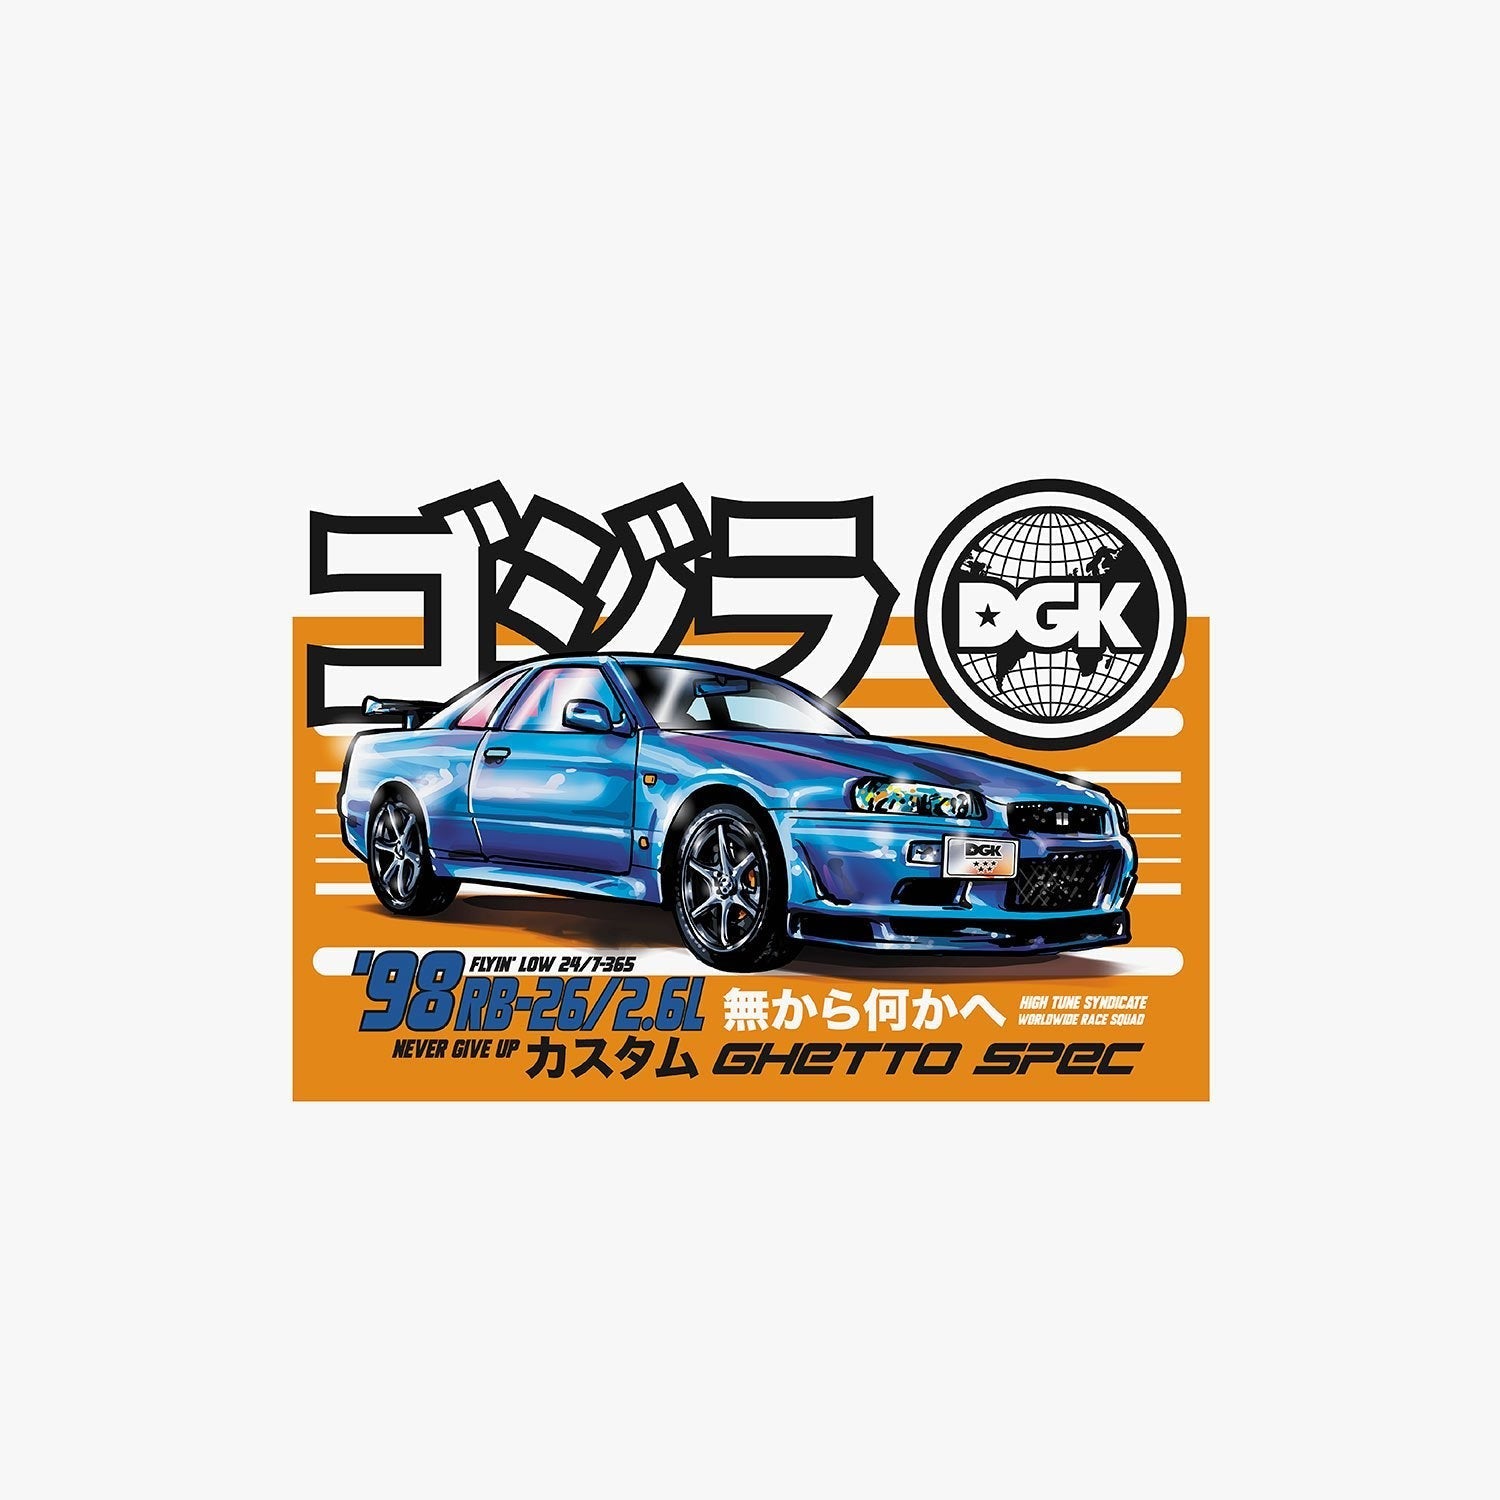 Godzilla sticker (new) · BunLeungArt · Online Store Powered by Storenvy